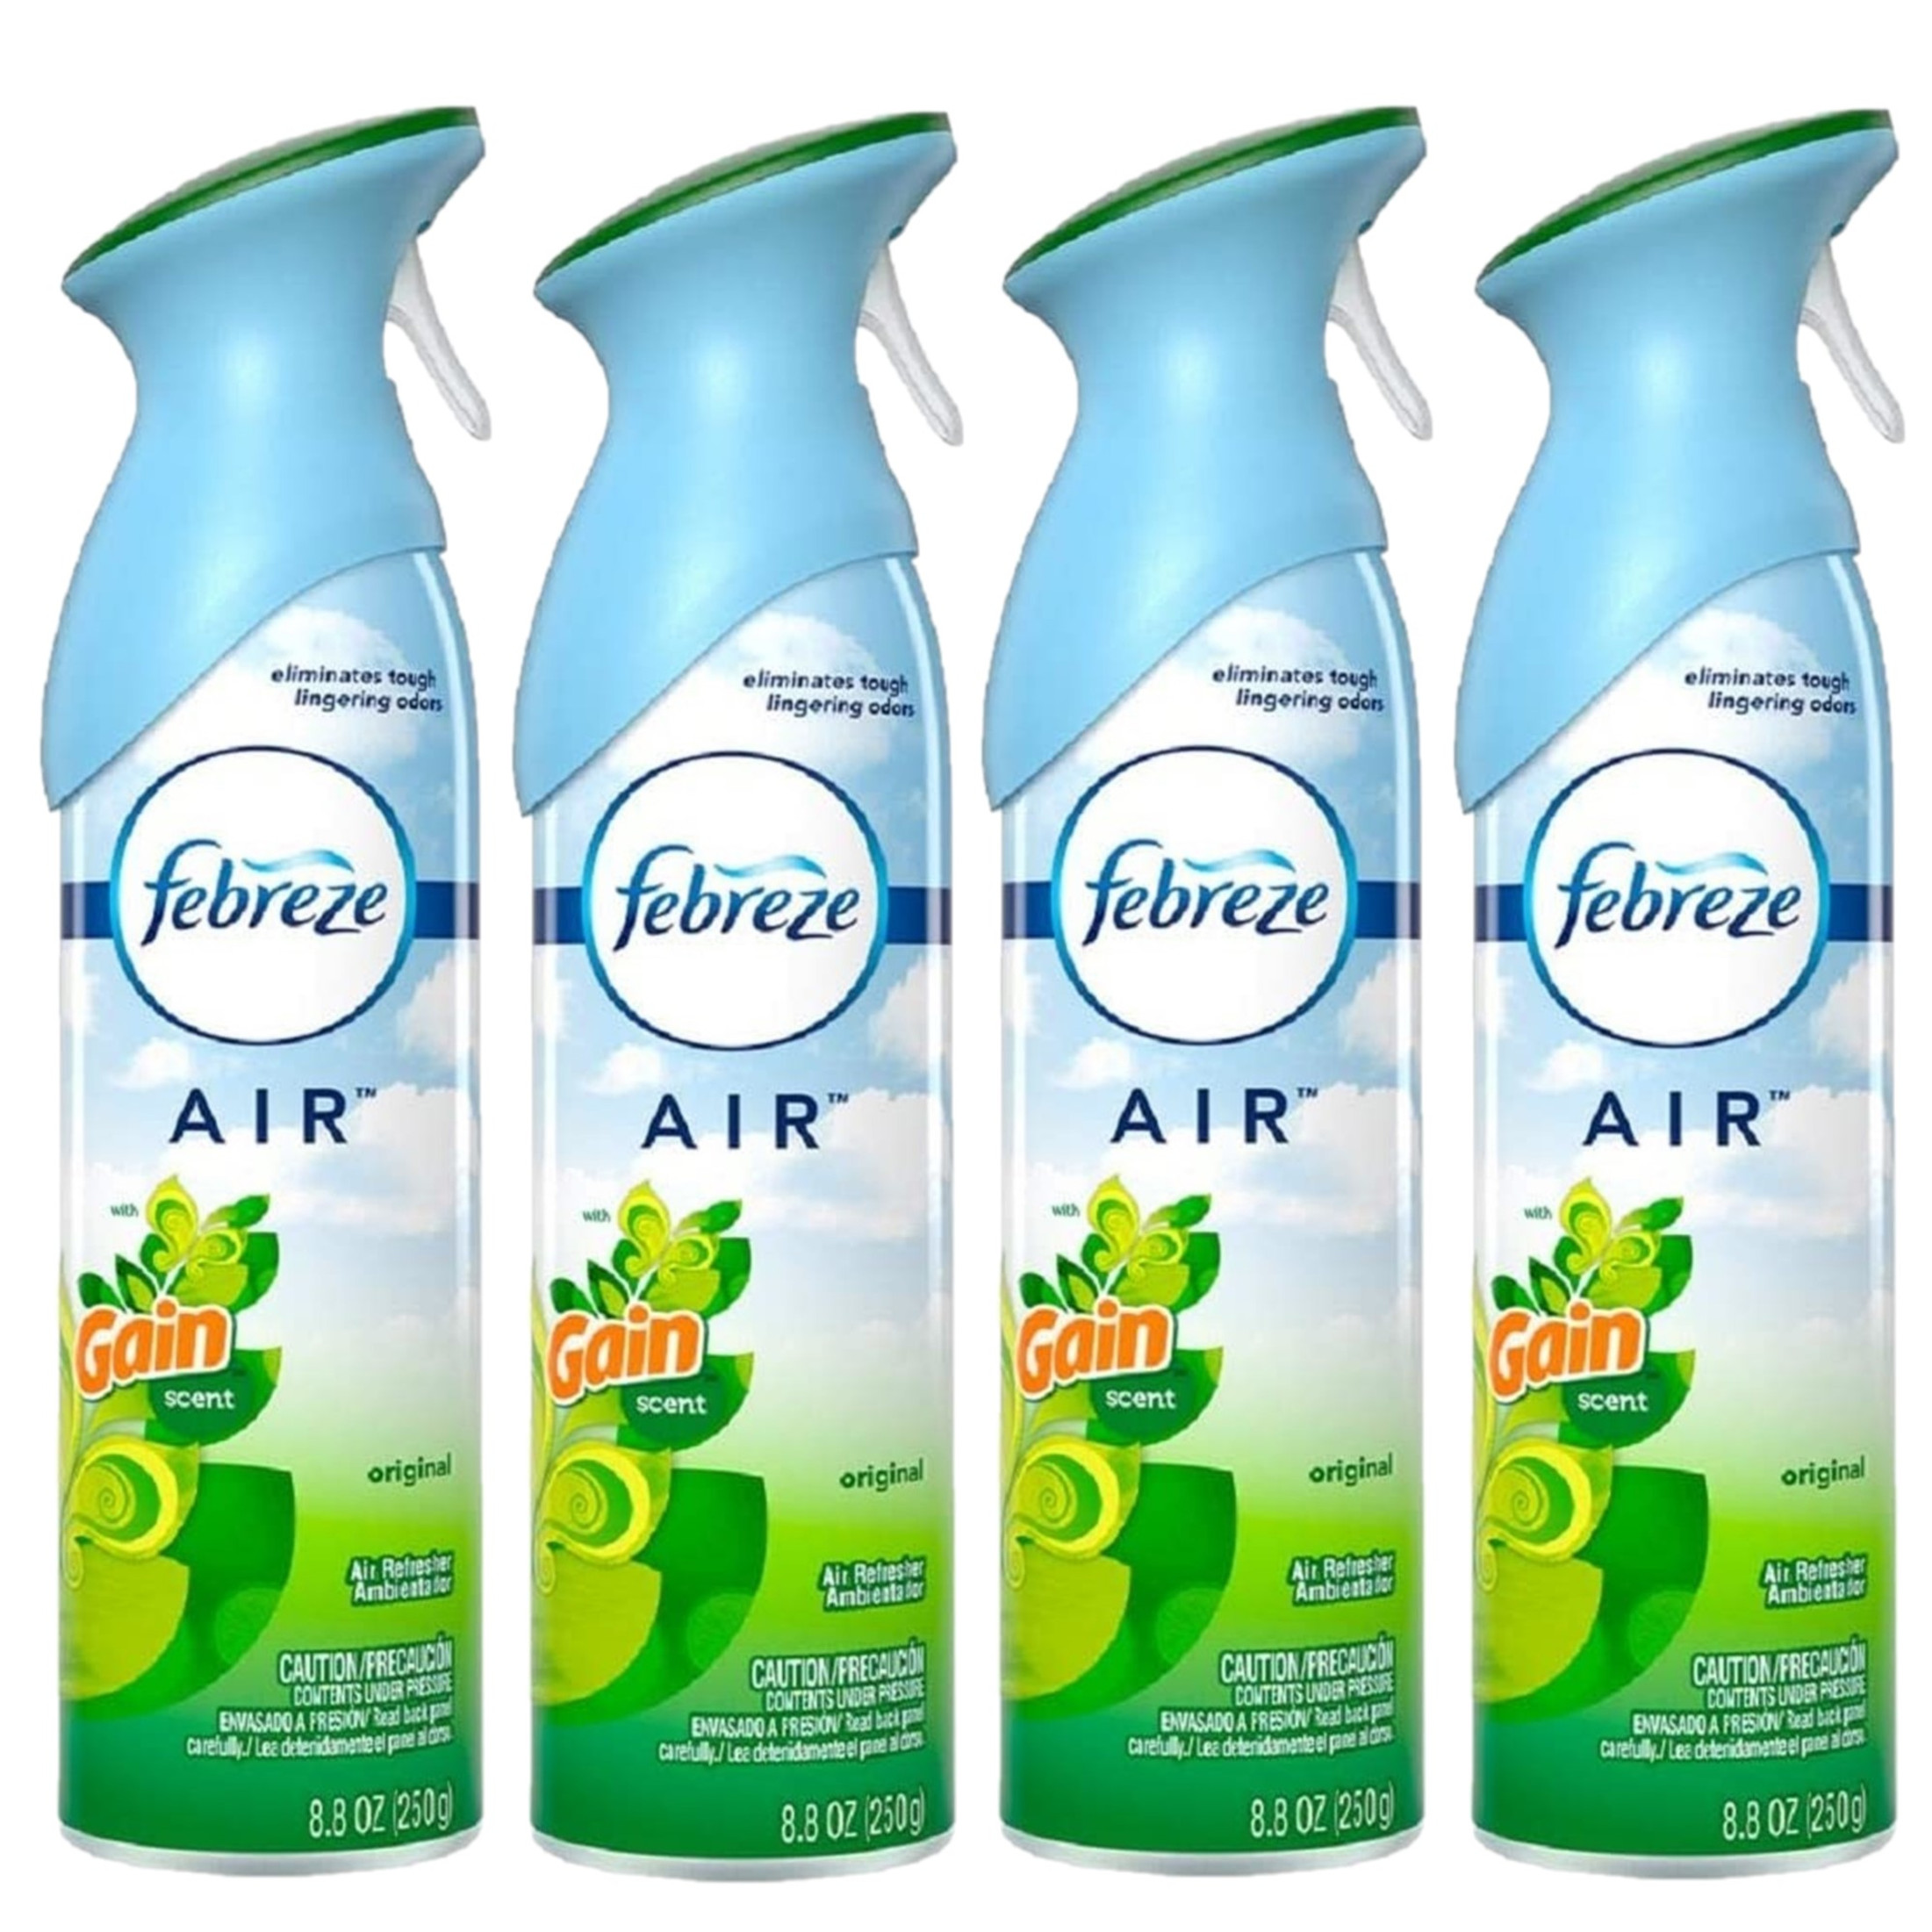 Febreze Odor-Eliminating Air Freshener with Gain Original Scent, 8.8 fl oz ( Pack of 4) - Esbenshades